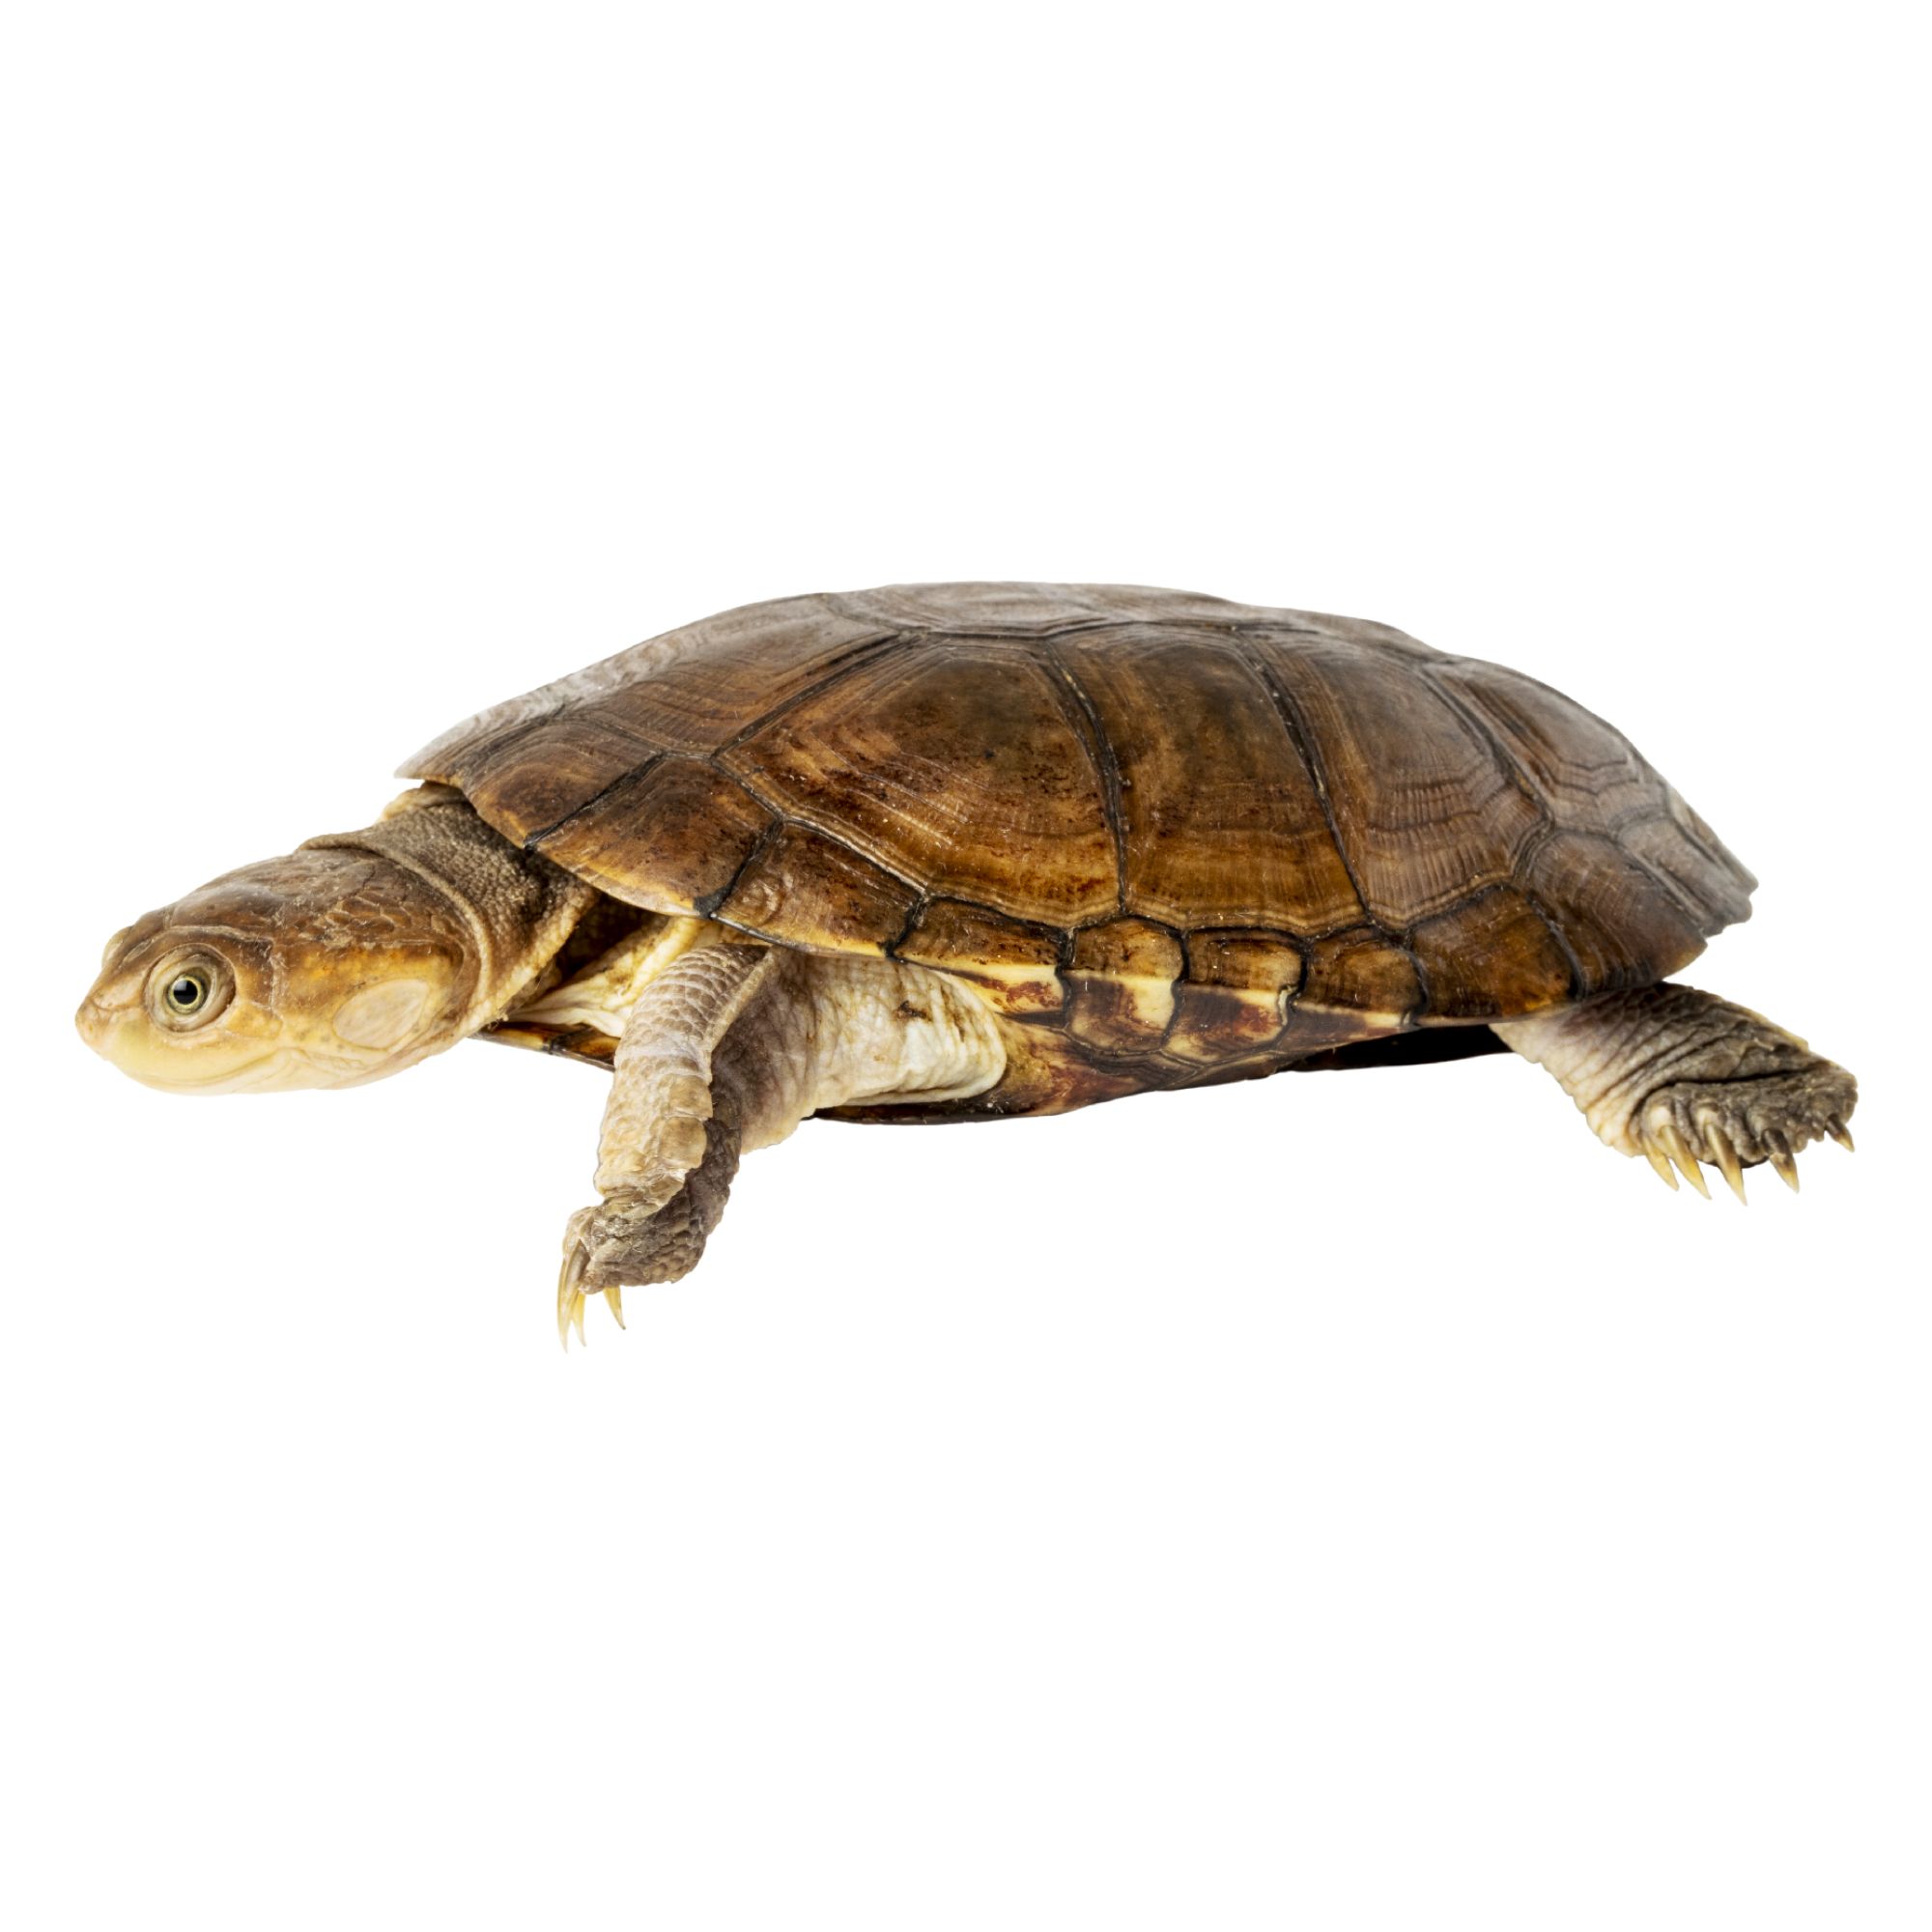 African Sideneck Turtle | reptile Snakes, Turtles & More | PetSmart